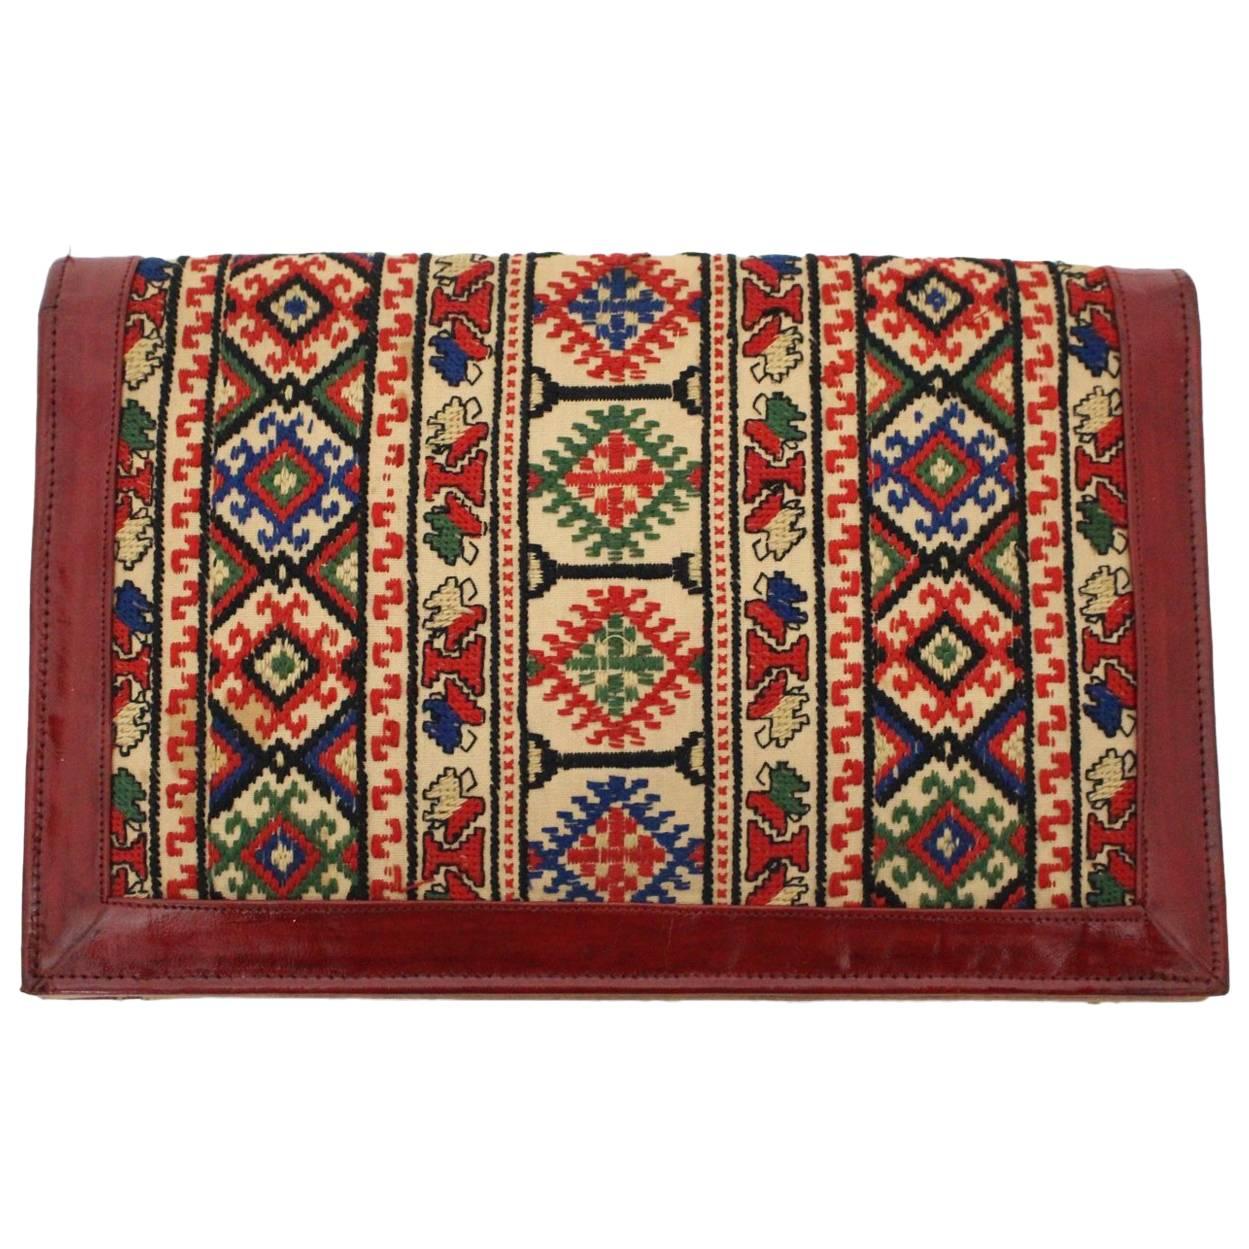 Multicolored Handbag Clutch 1930s Eastern Europe